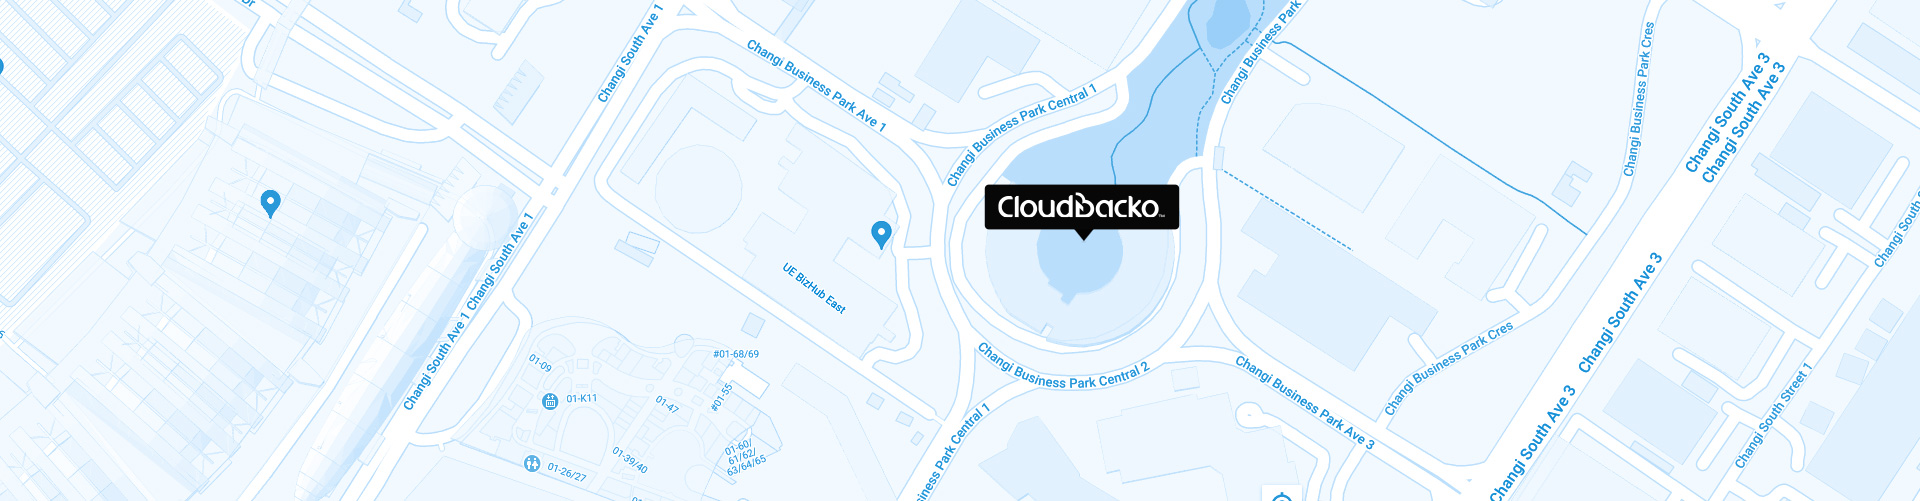 Map of CloudBacko office location